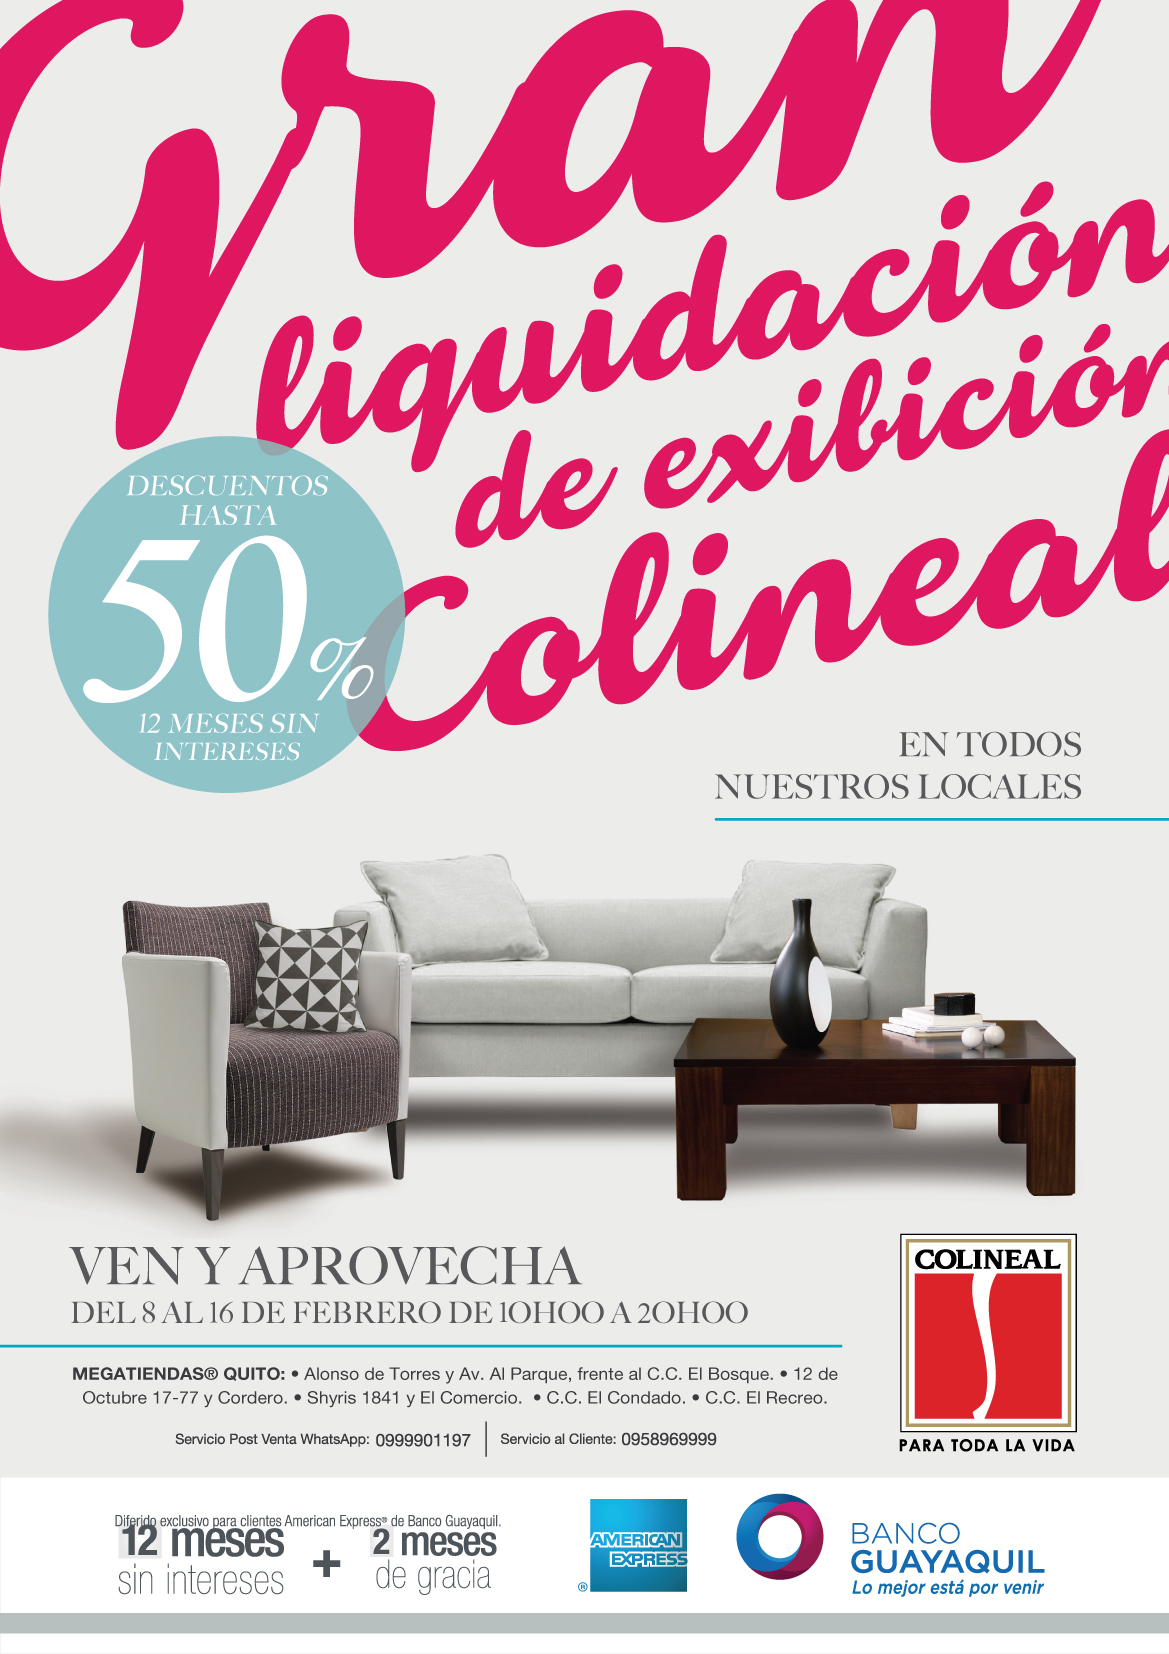 kv visual ads publicity furniture colineal Ecuador guayaquil